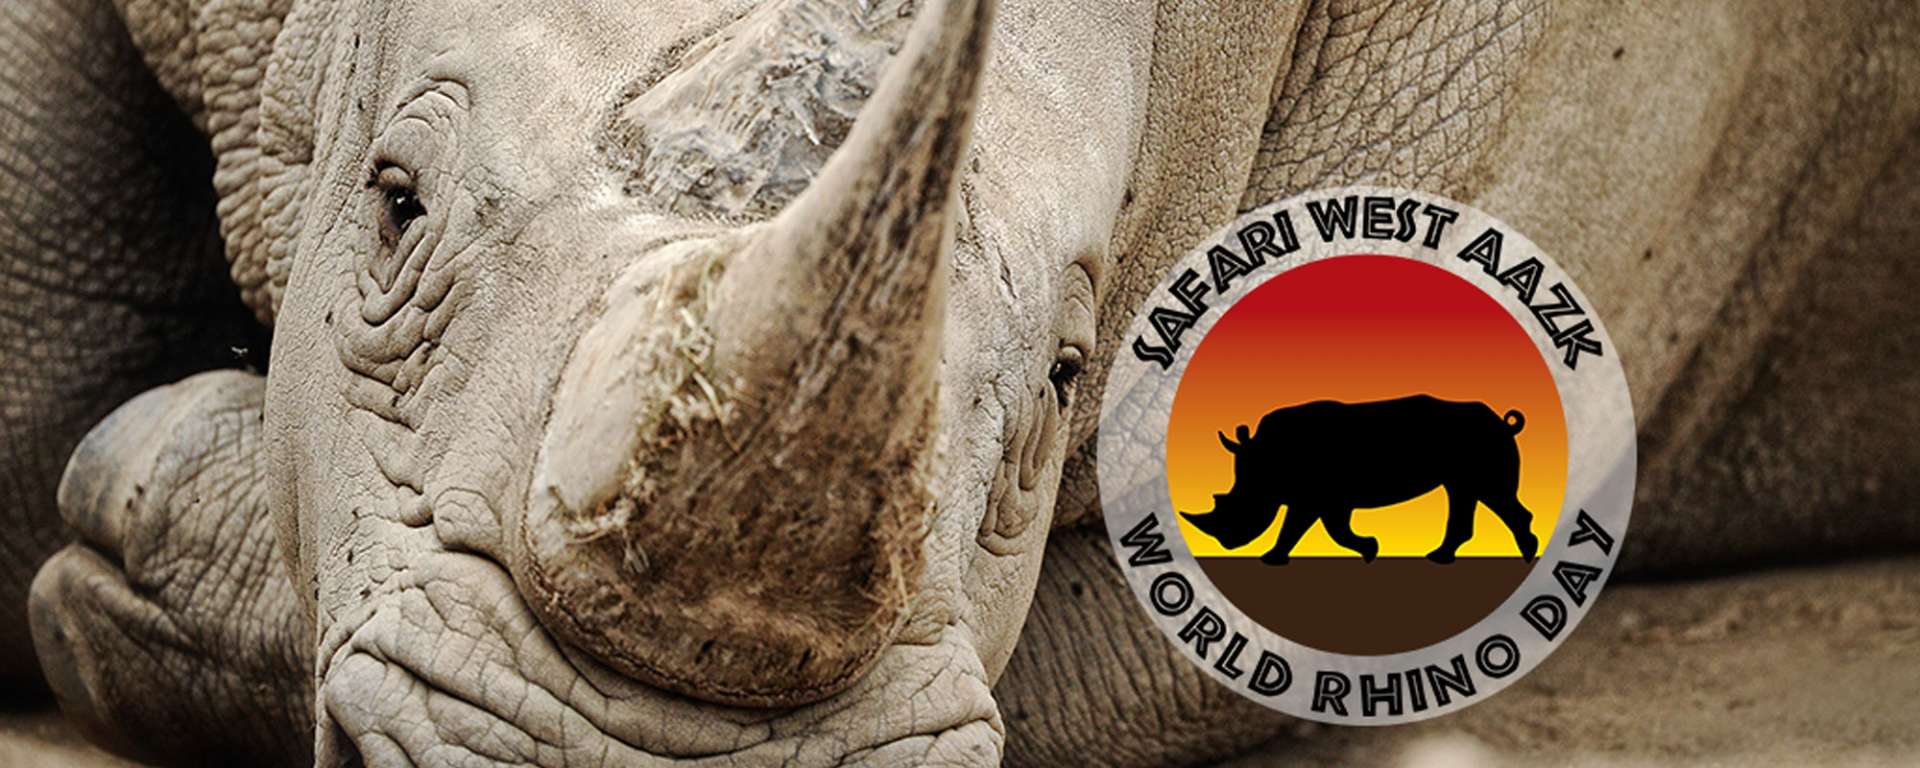 Safari West Logo - Nail it for Rhinos! - Safari West